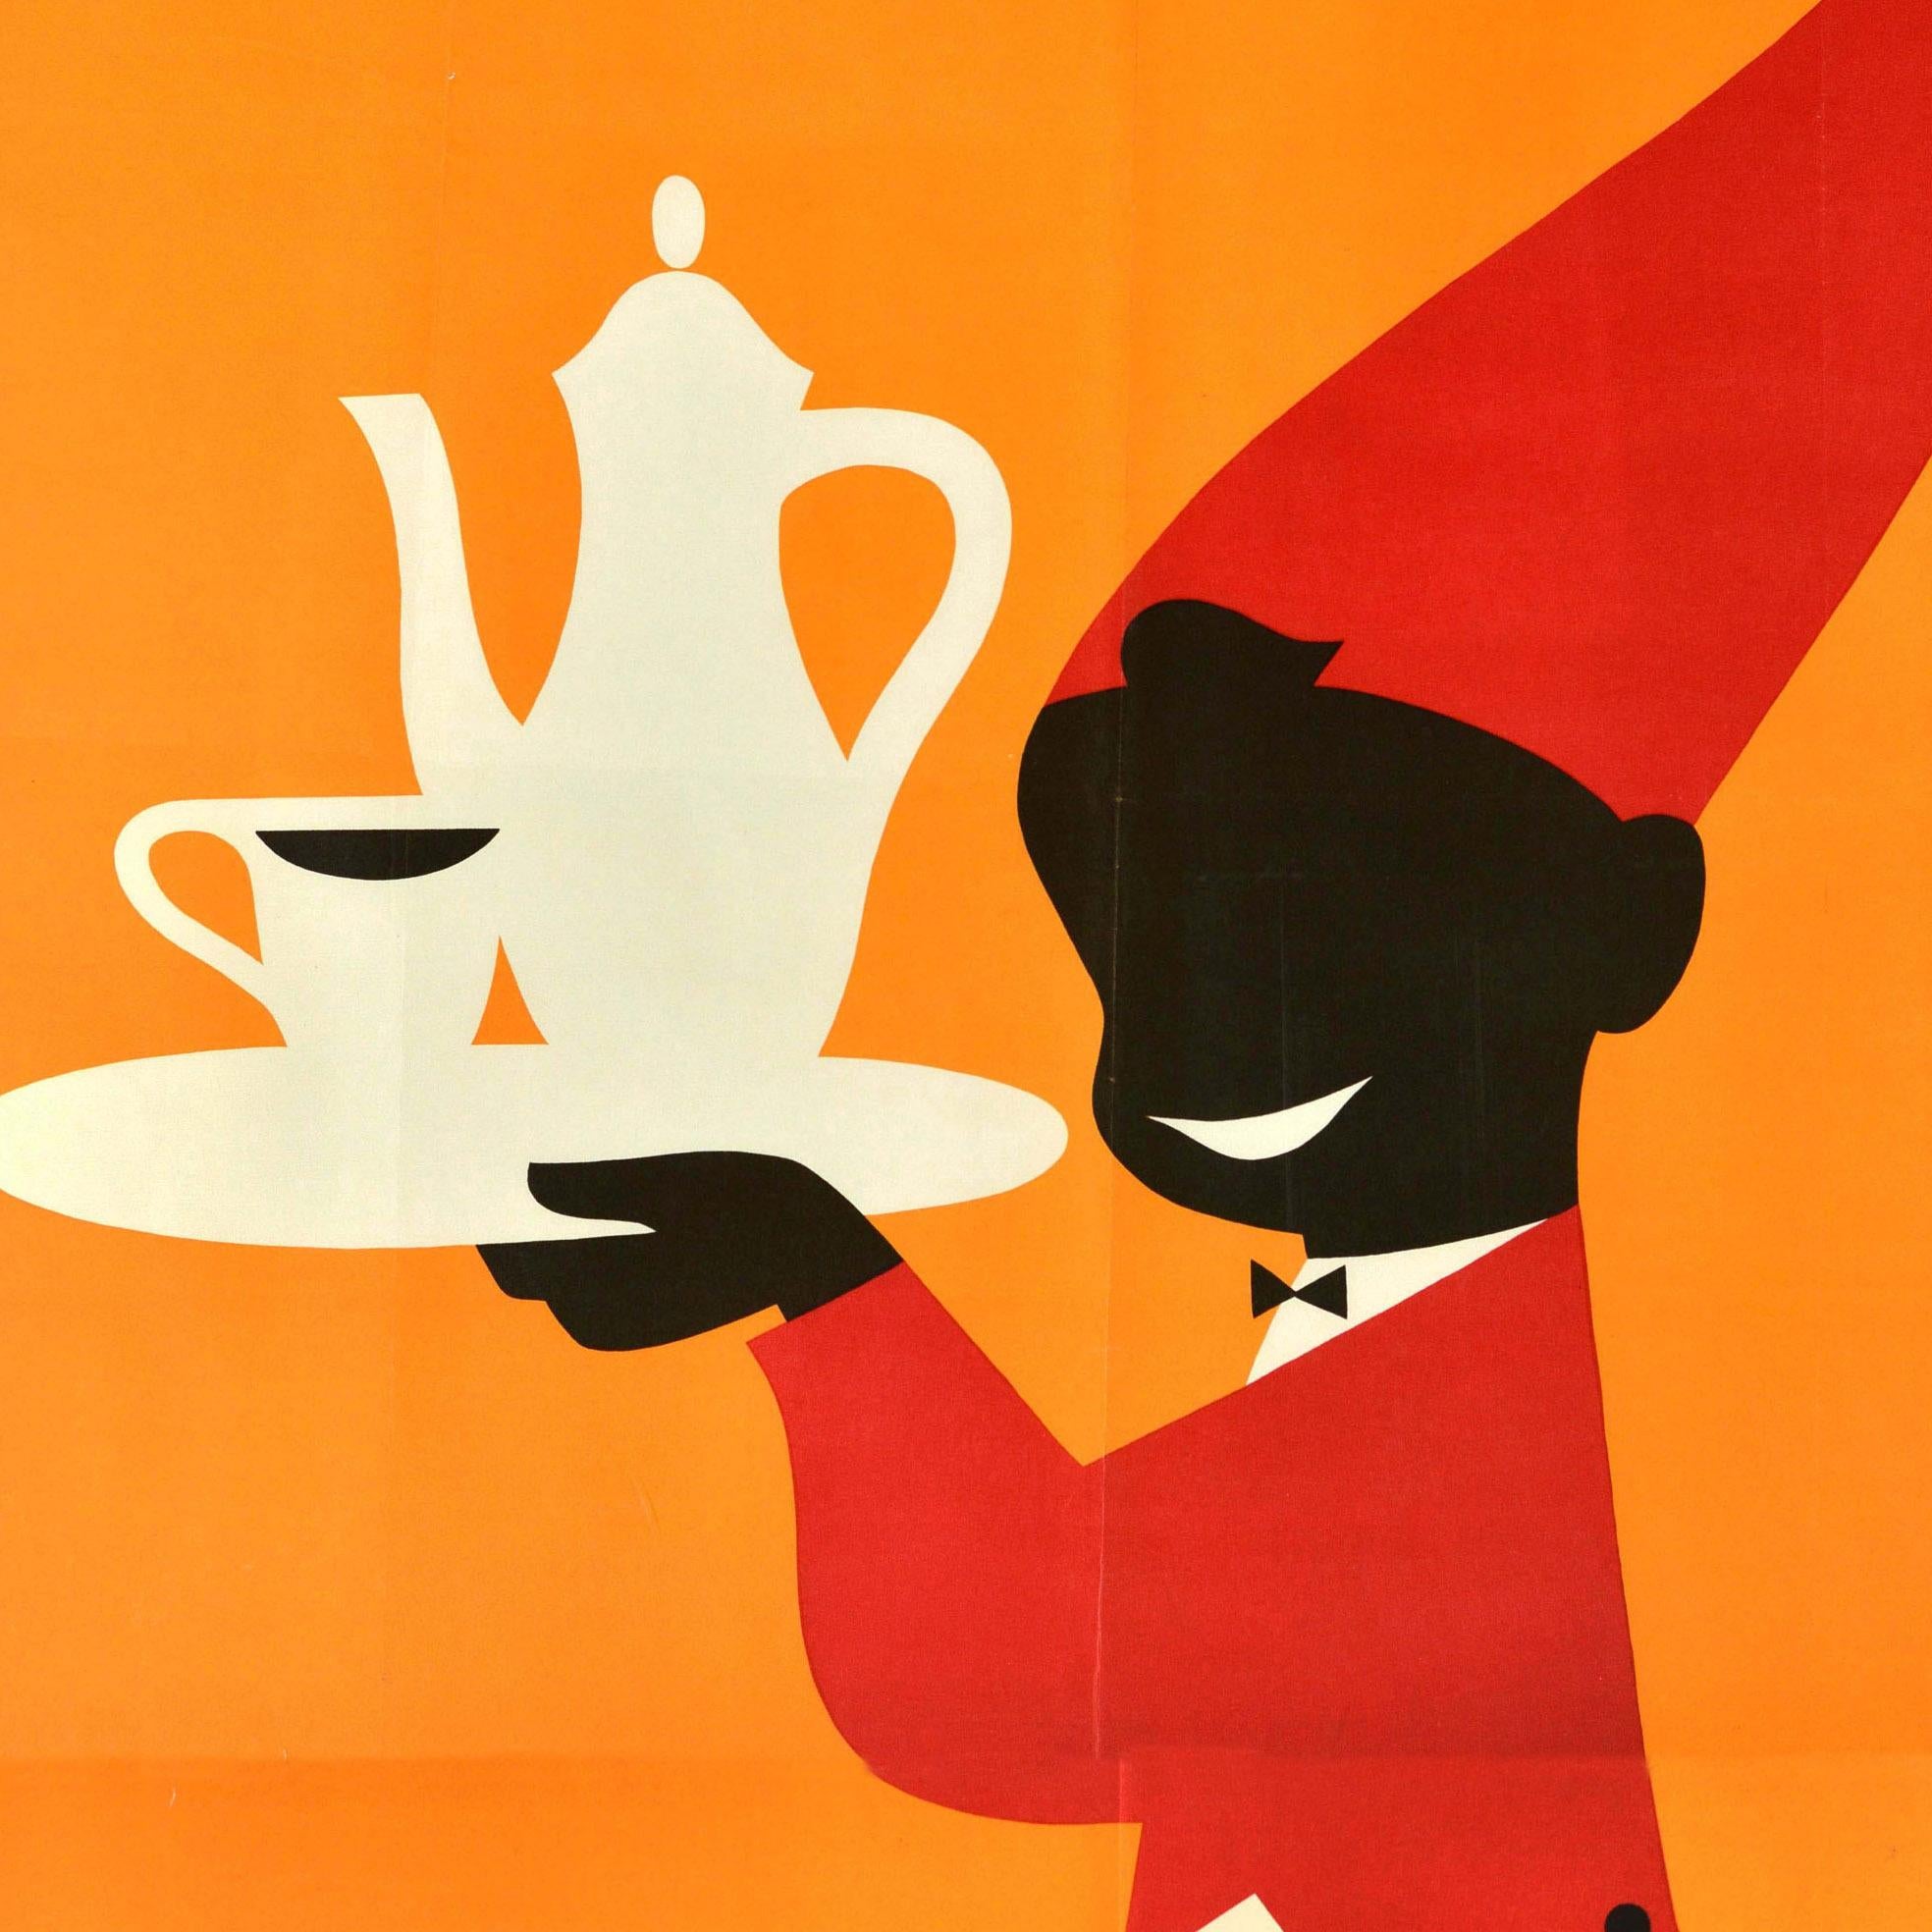 Original Vintage Drink Advertising Poster Meinl Kaffee Coffee Fez Hat Design Art - Print by Unknown